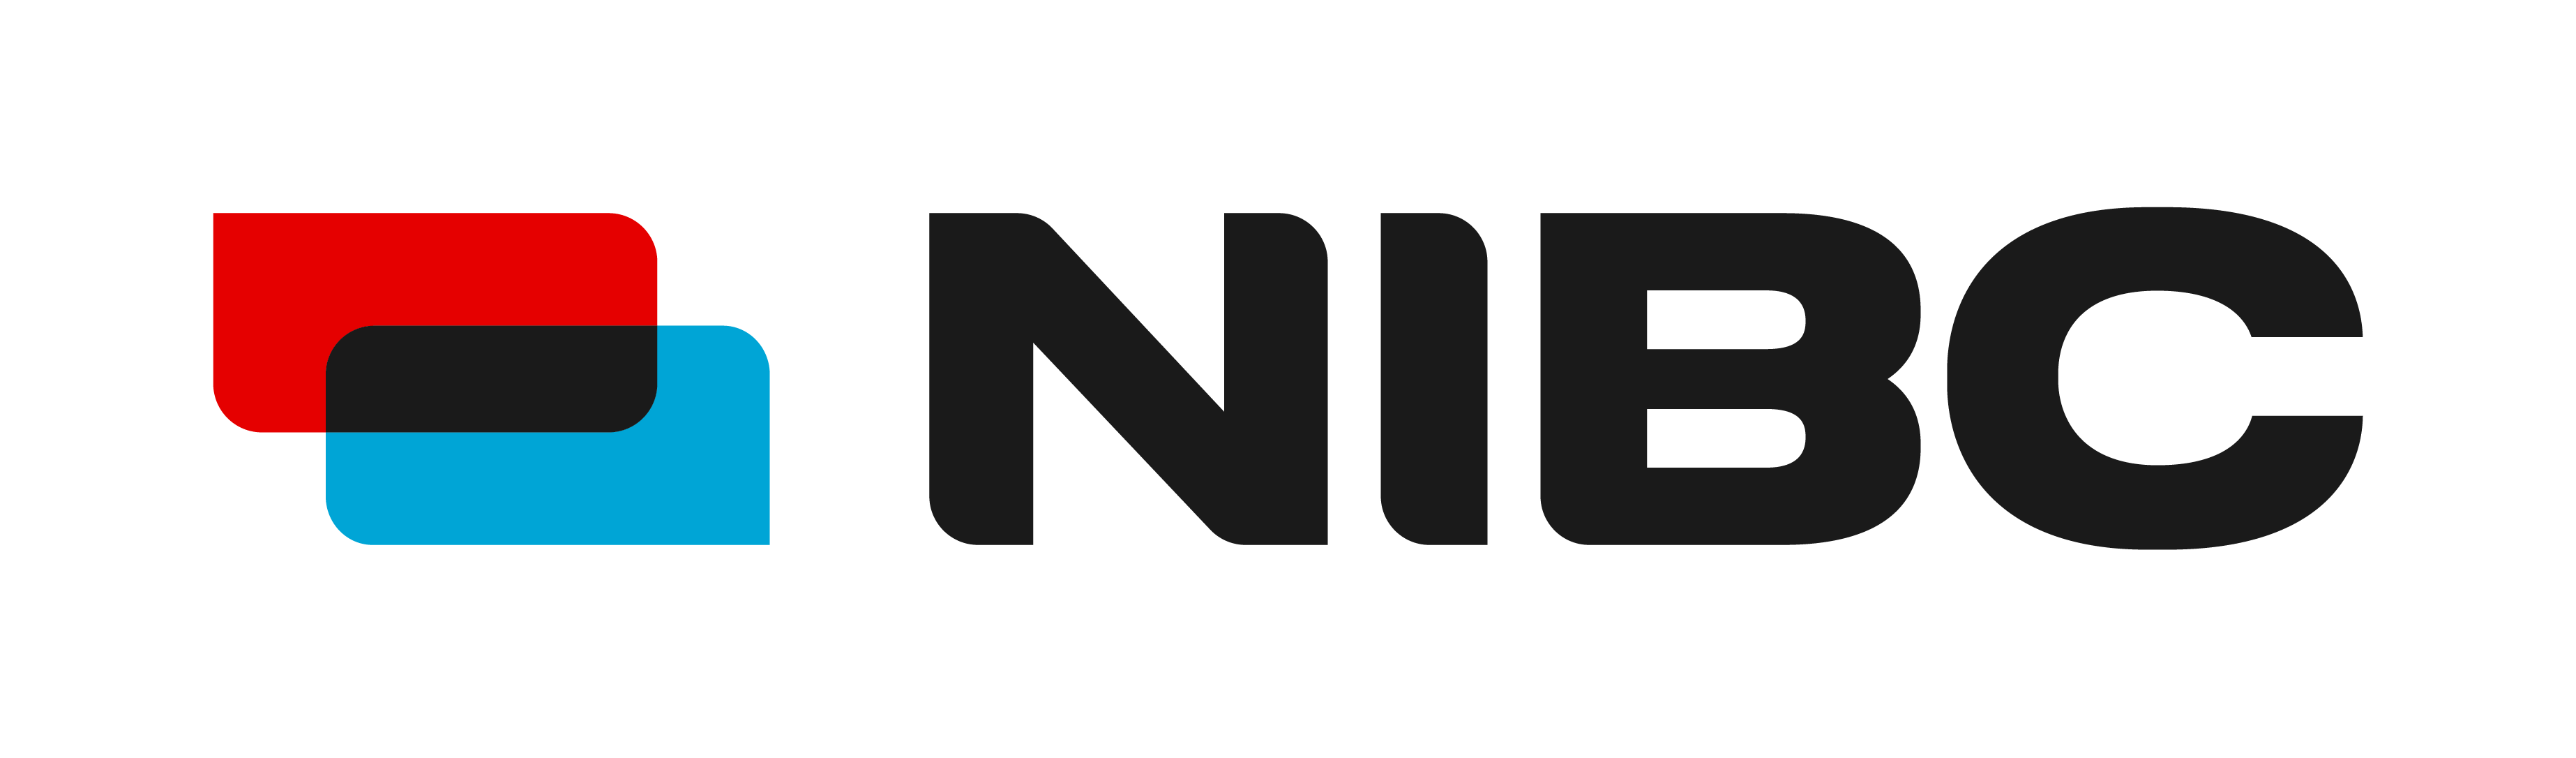 Nibc logo new